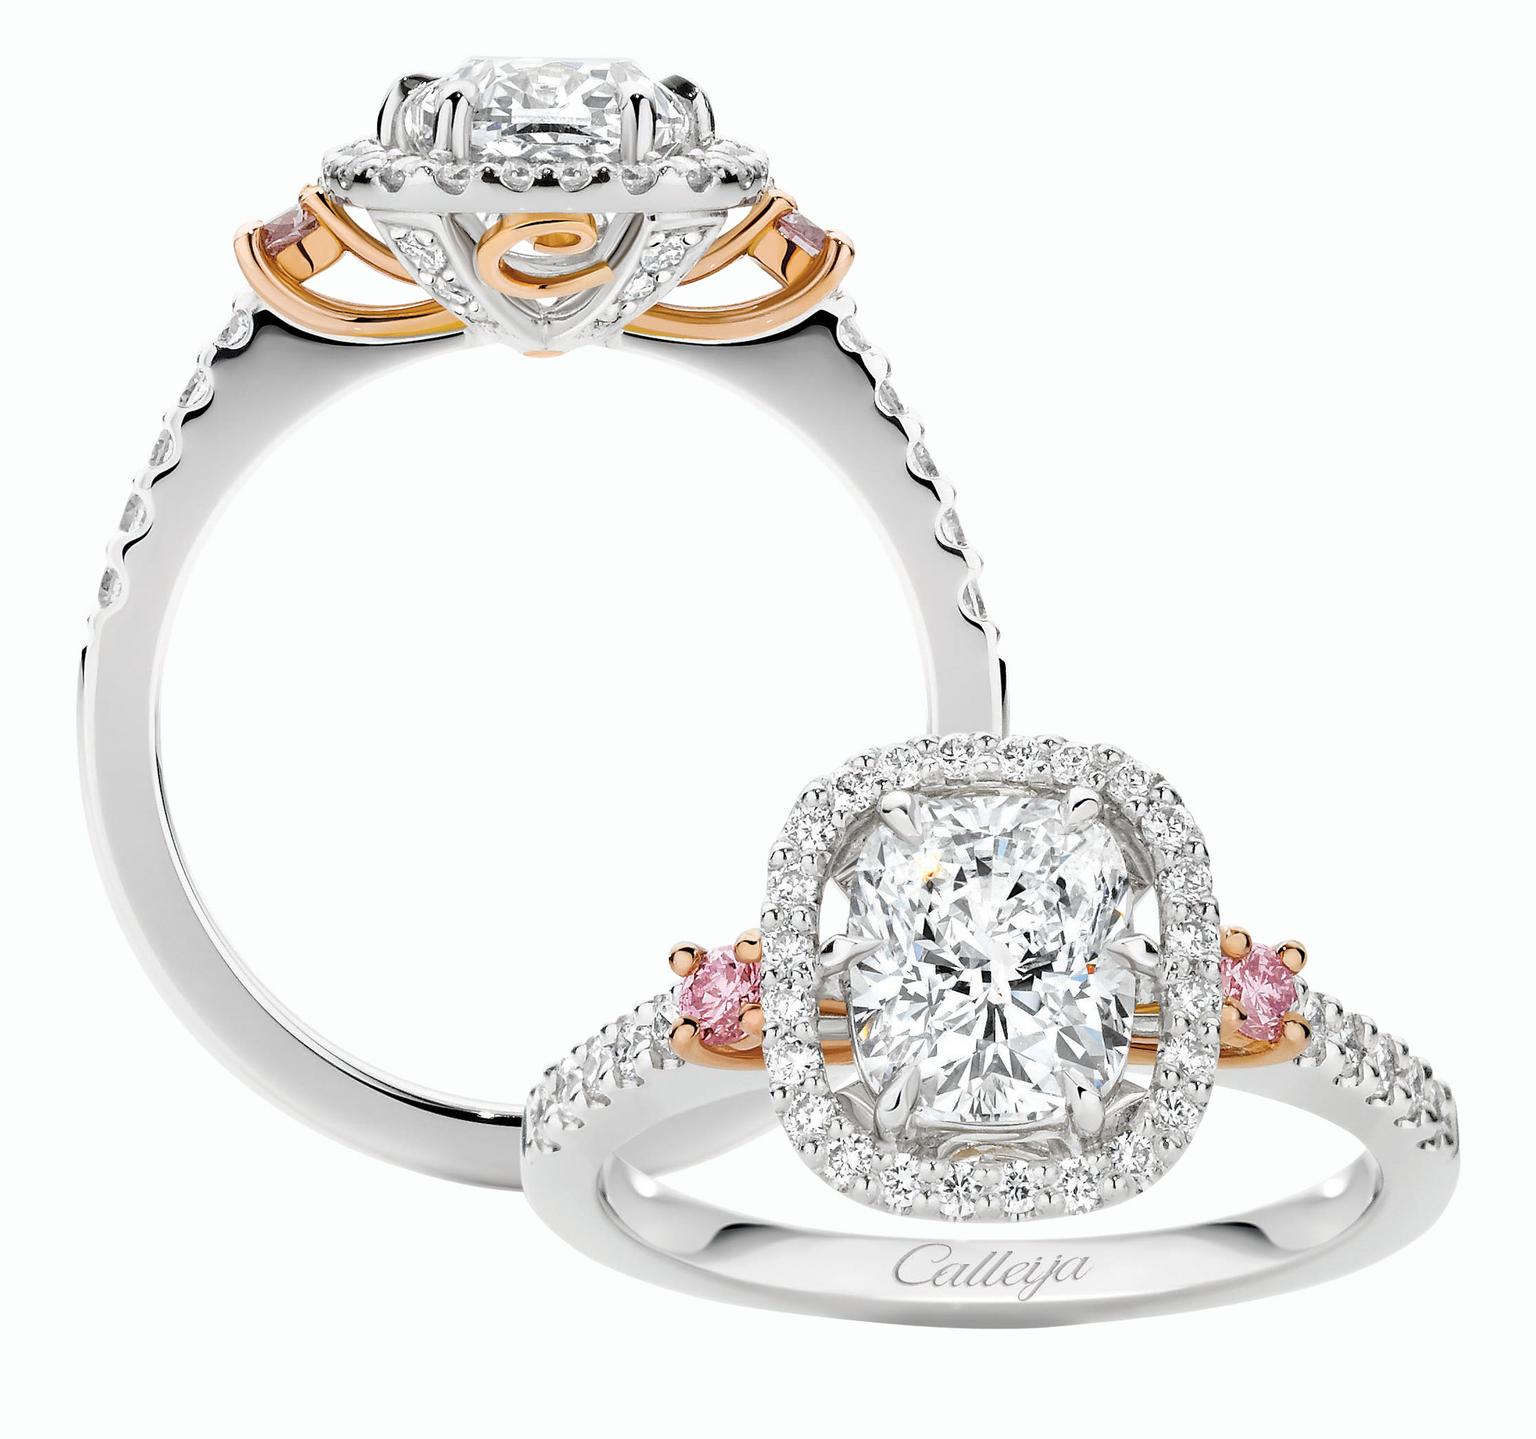 Calleija Glacier white and pink diamond ring_20140318_Zoom